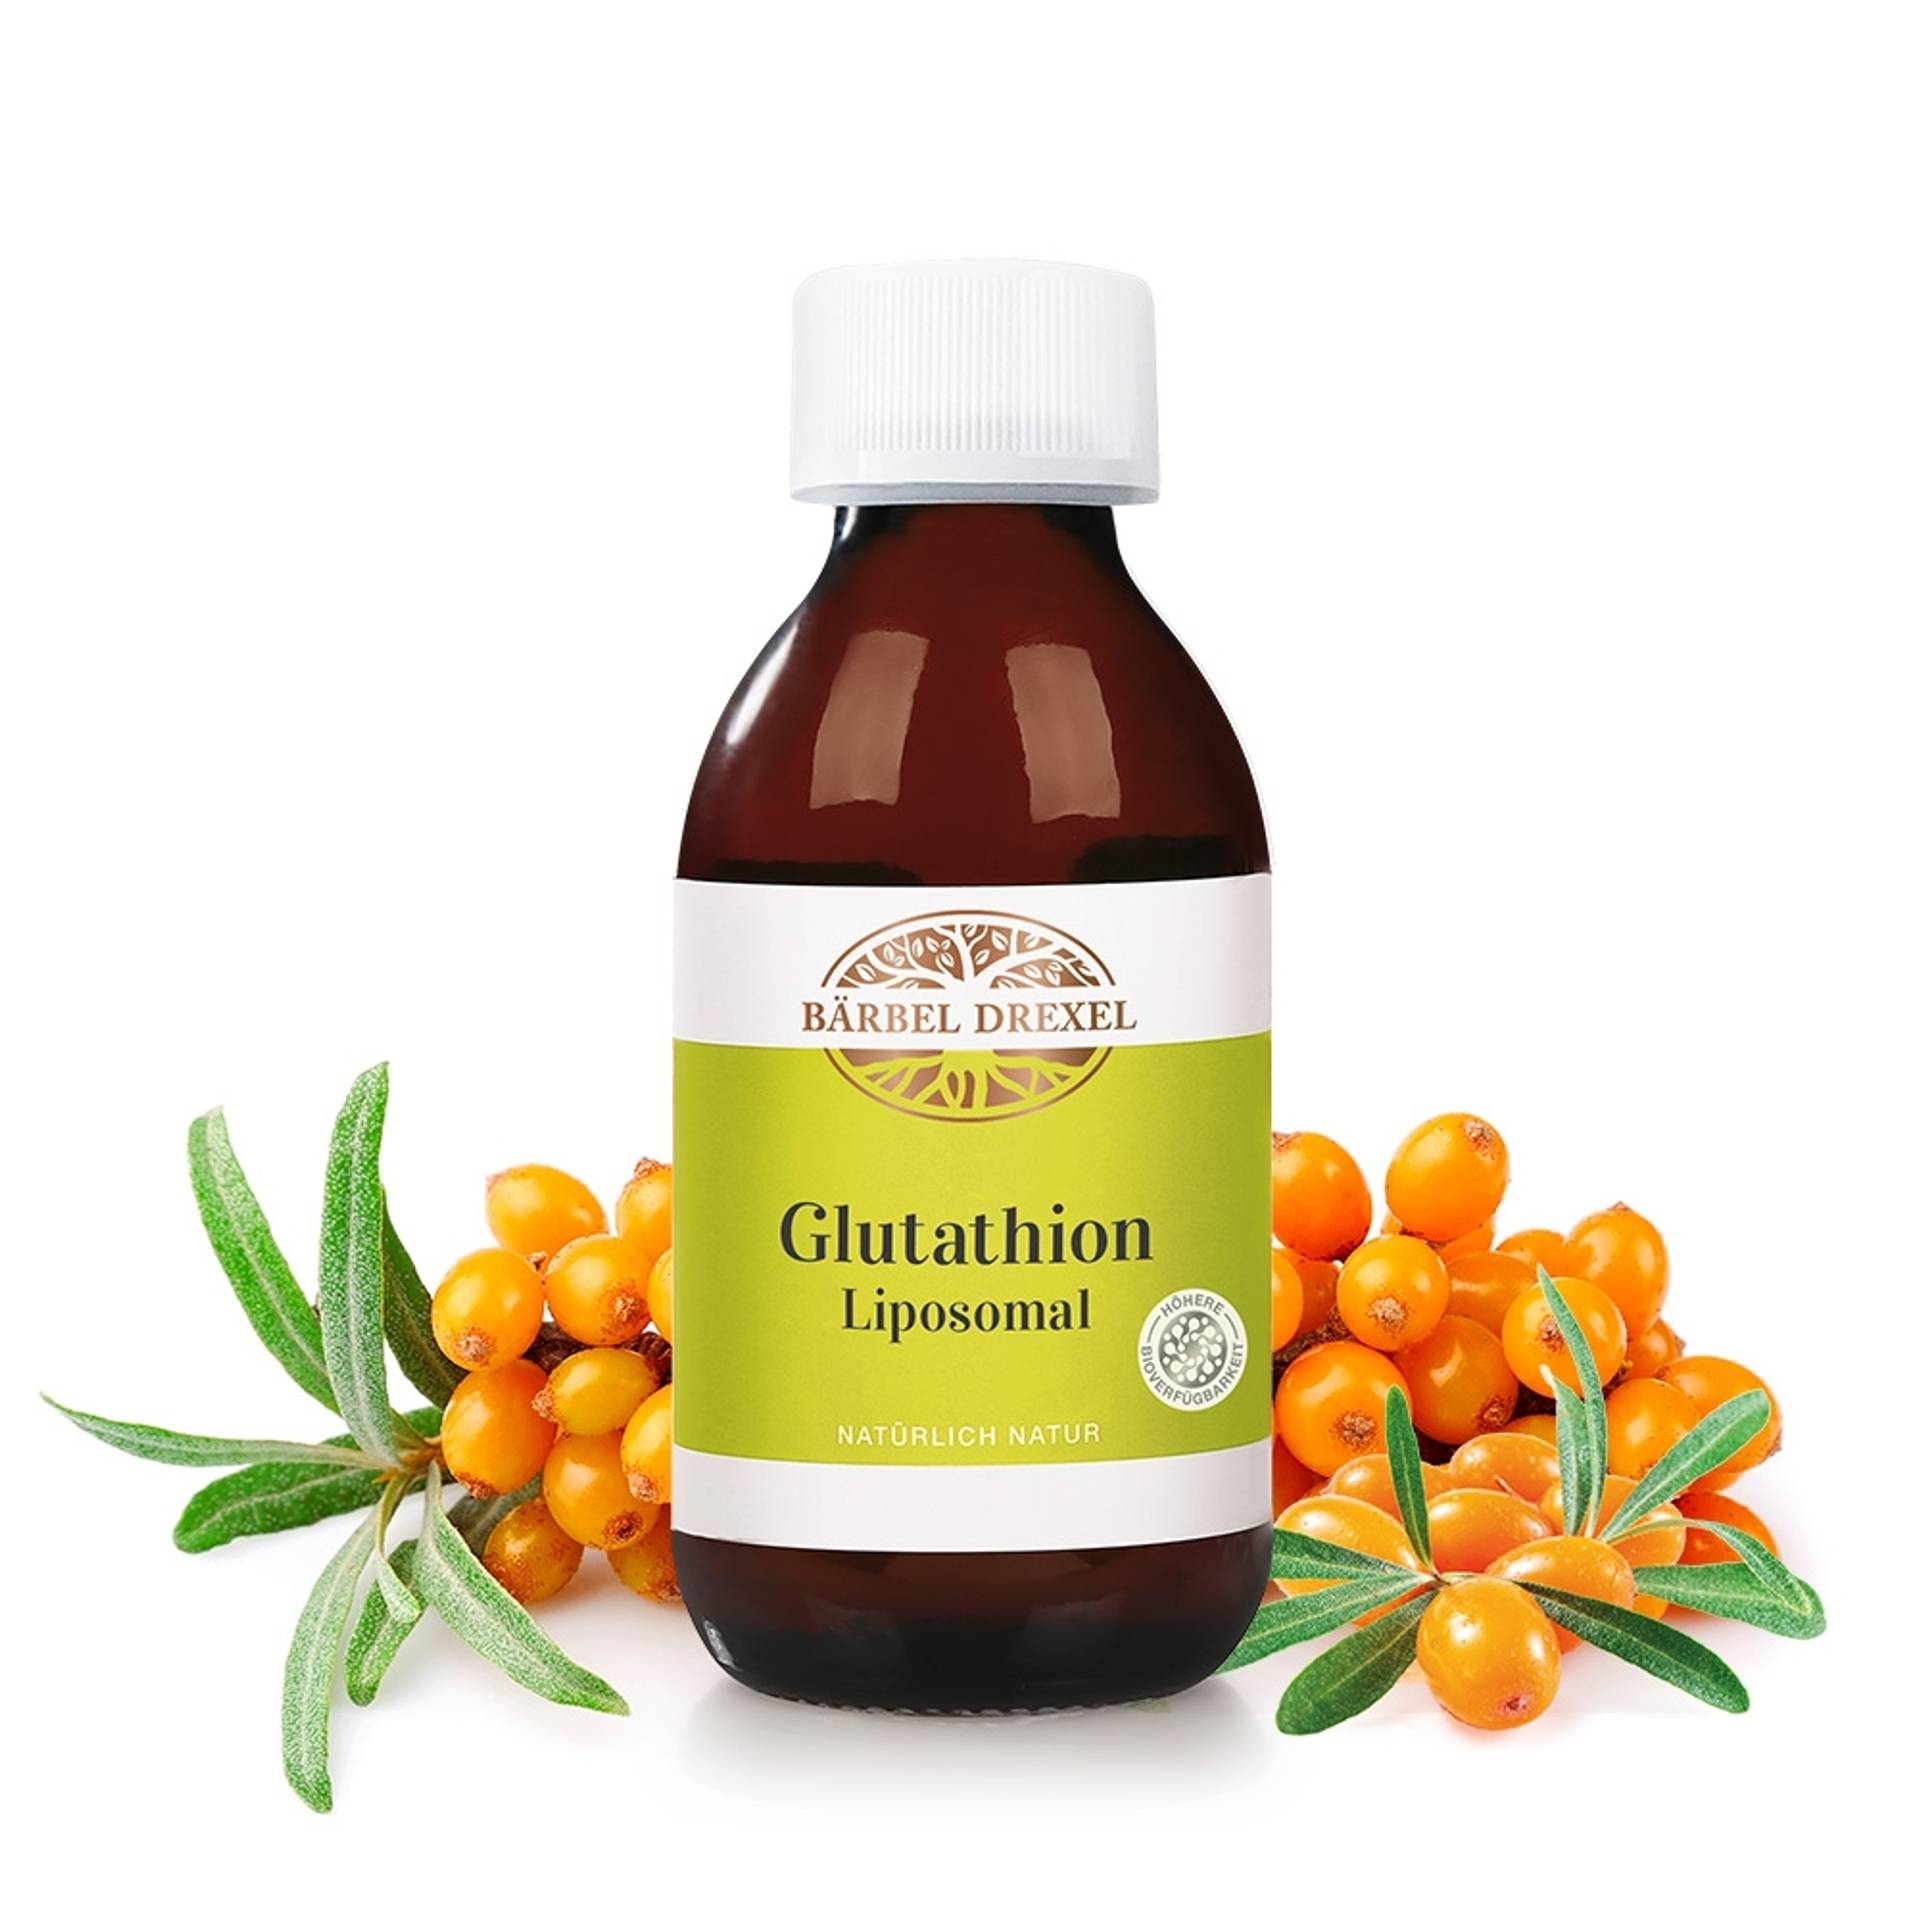 78181-glutathion-liposomal-150ml_mit-deko.jpg